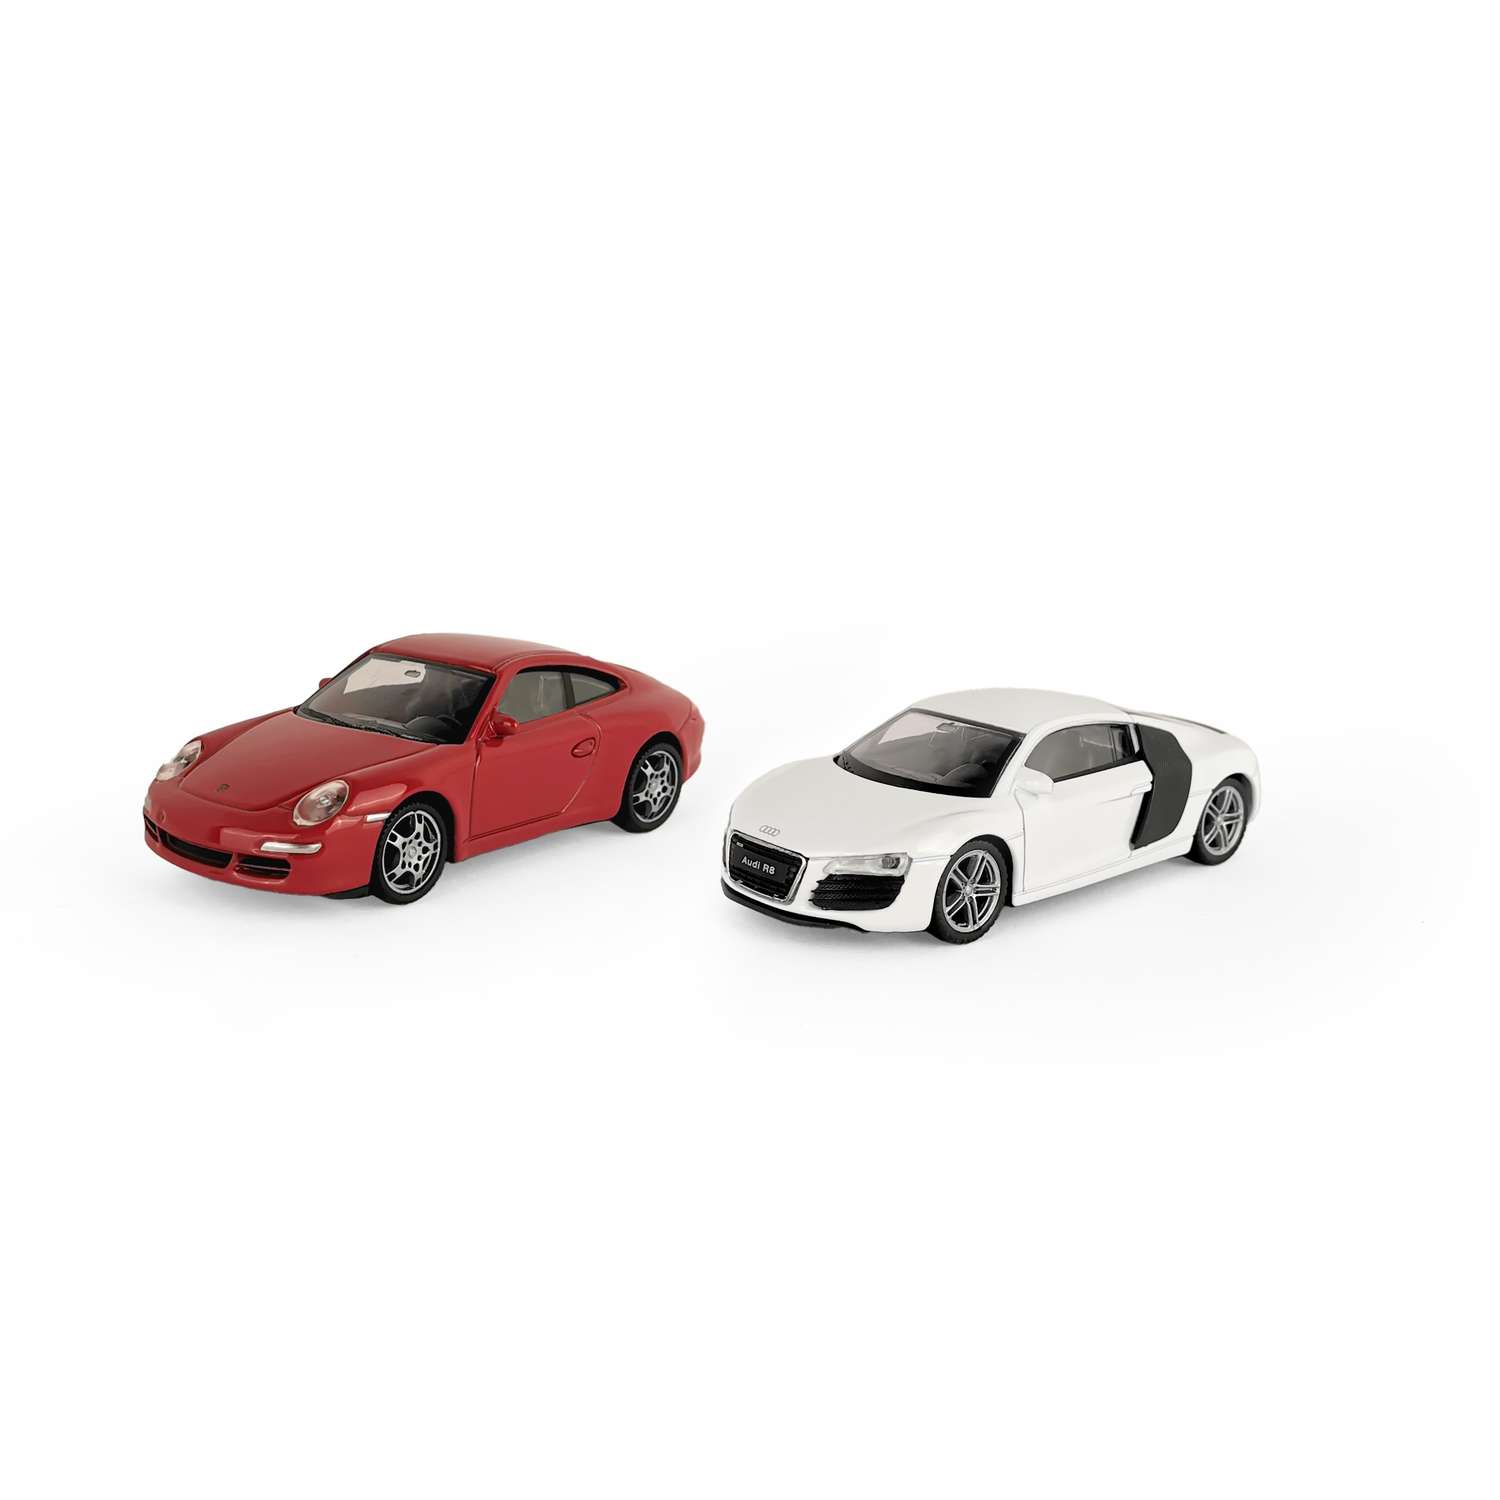 Набор WELLY Модели машин 1:43 Porsche 911 Carrera S и Audi R8 Coupe 44000-2SG(B) - фото 2